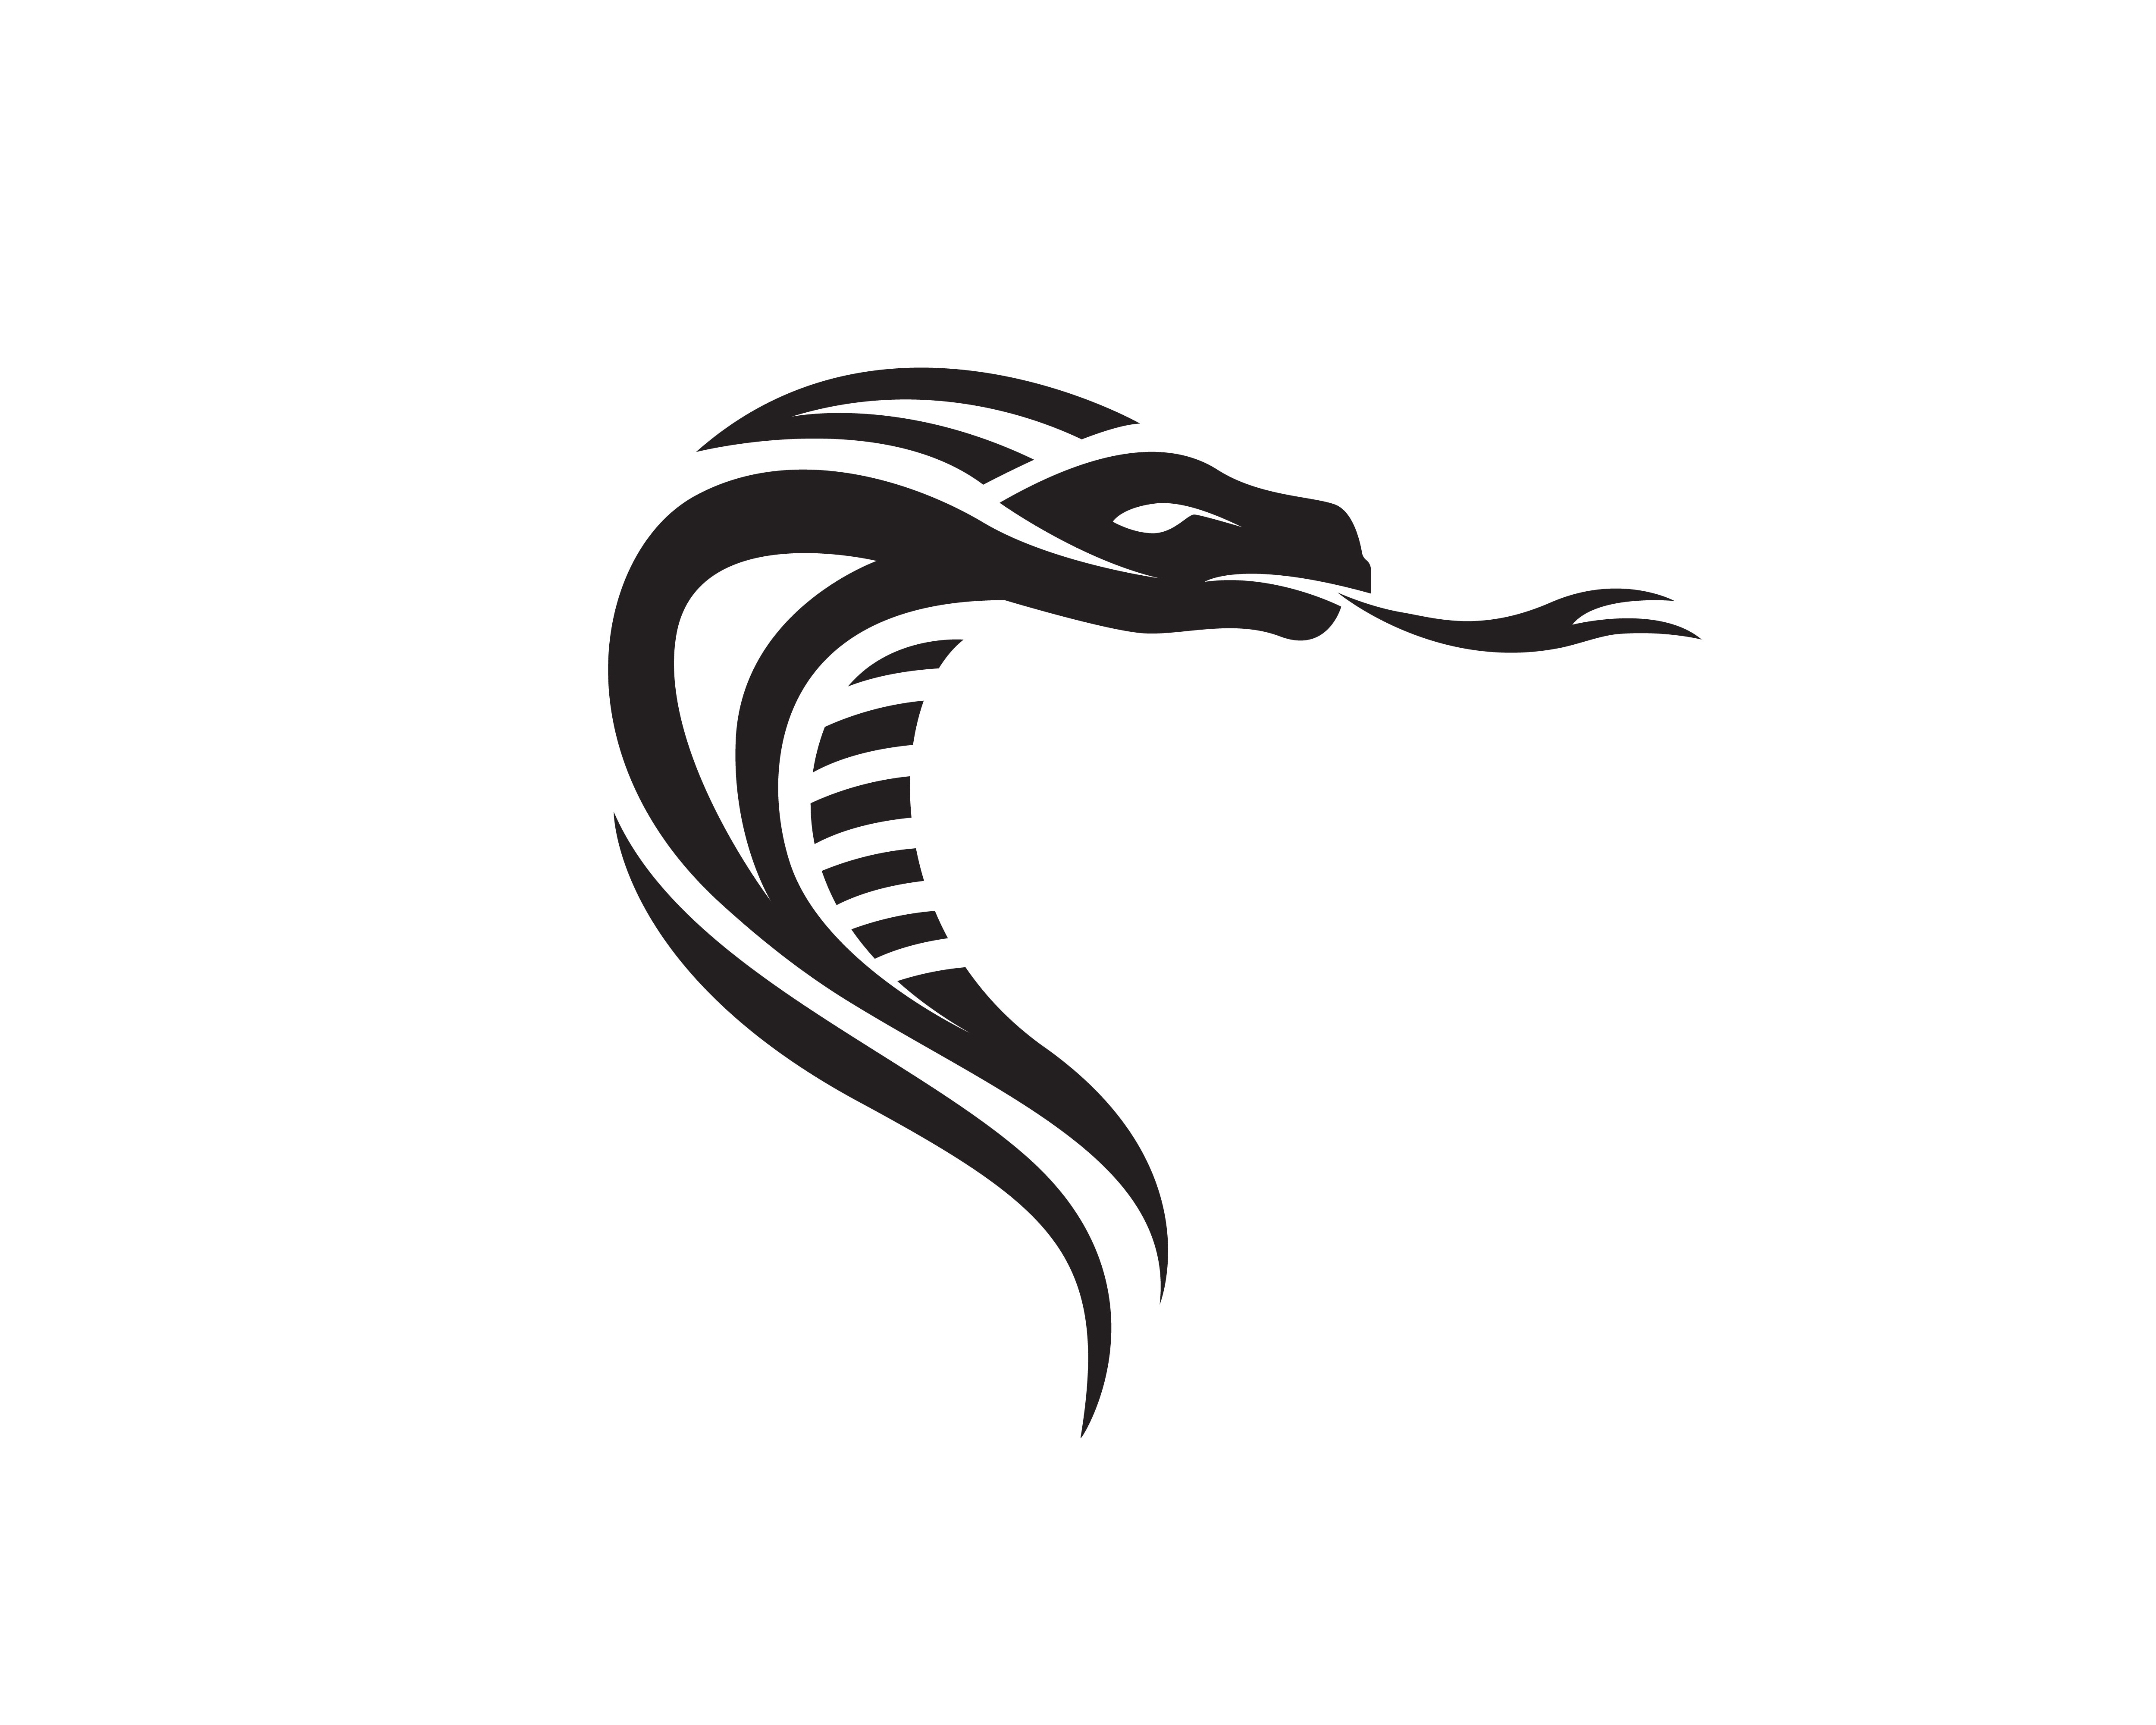 viper snake logo design element. danger snake icon. viper symbol 623024 ...
 Sea Serpent Logo